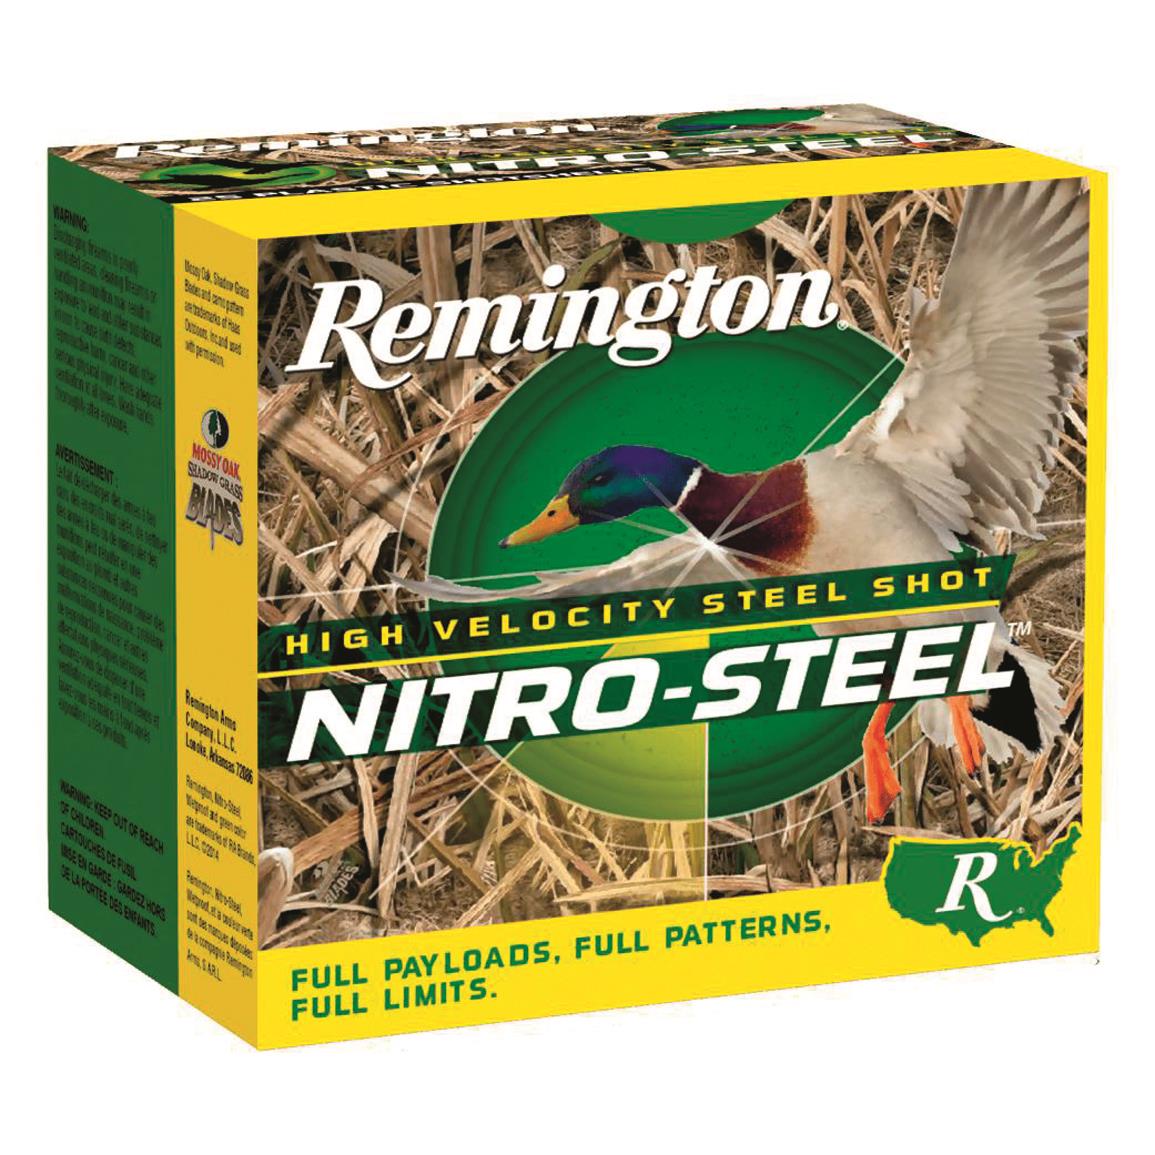 Remington Nitro-Steel High-Velocity, 12 Gauge, 2 3/4" Shot Shells, 1 1/4 oz., 250 Rounds